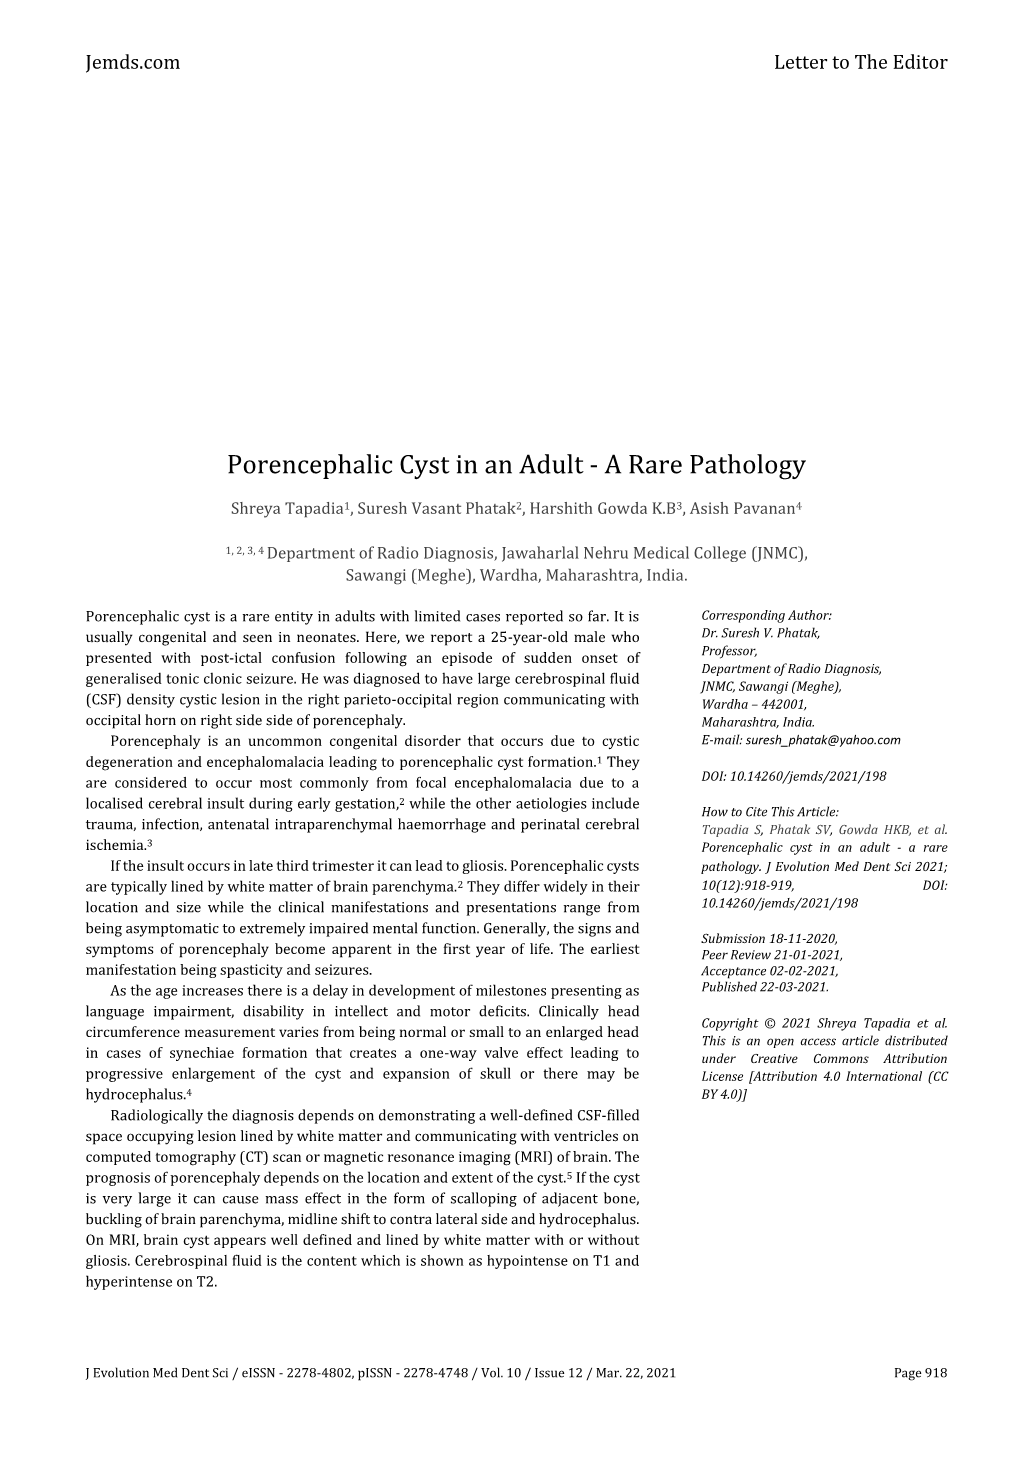 Porencephalic Cyst in an Adult - a Rare Pathology